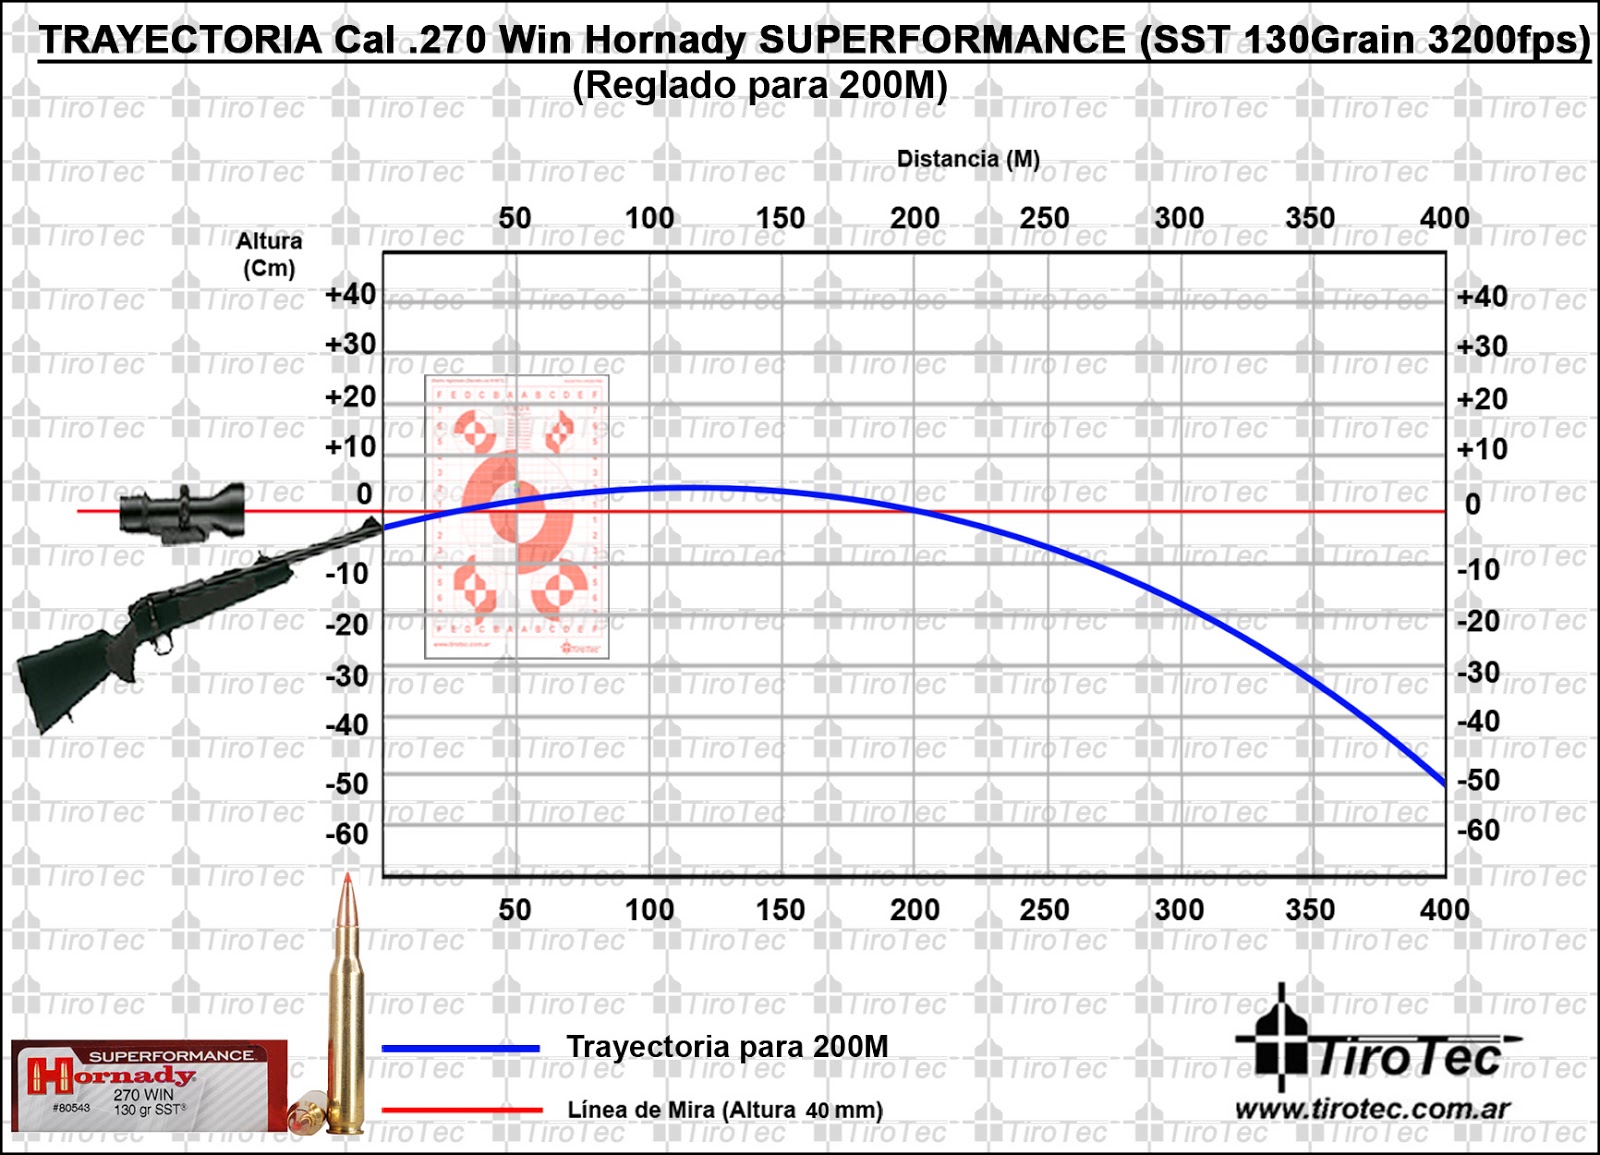 Tirotec: Calibre .270 Win Hornady SUPERFORMANCE SST 130Grain 3200fps